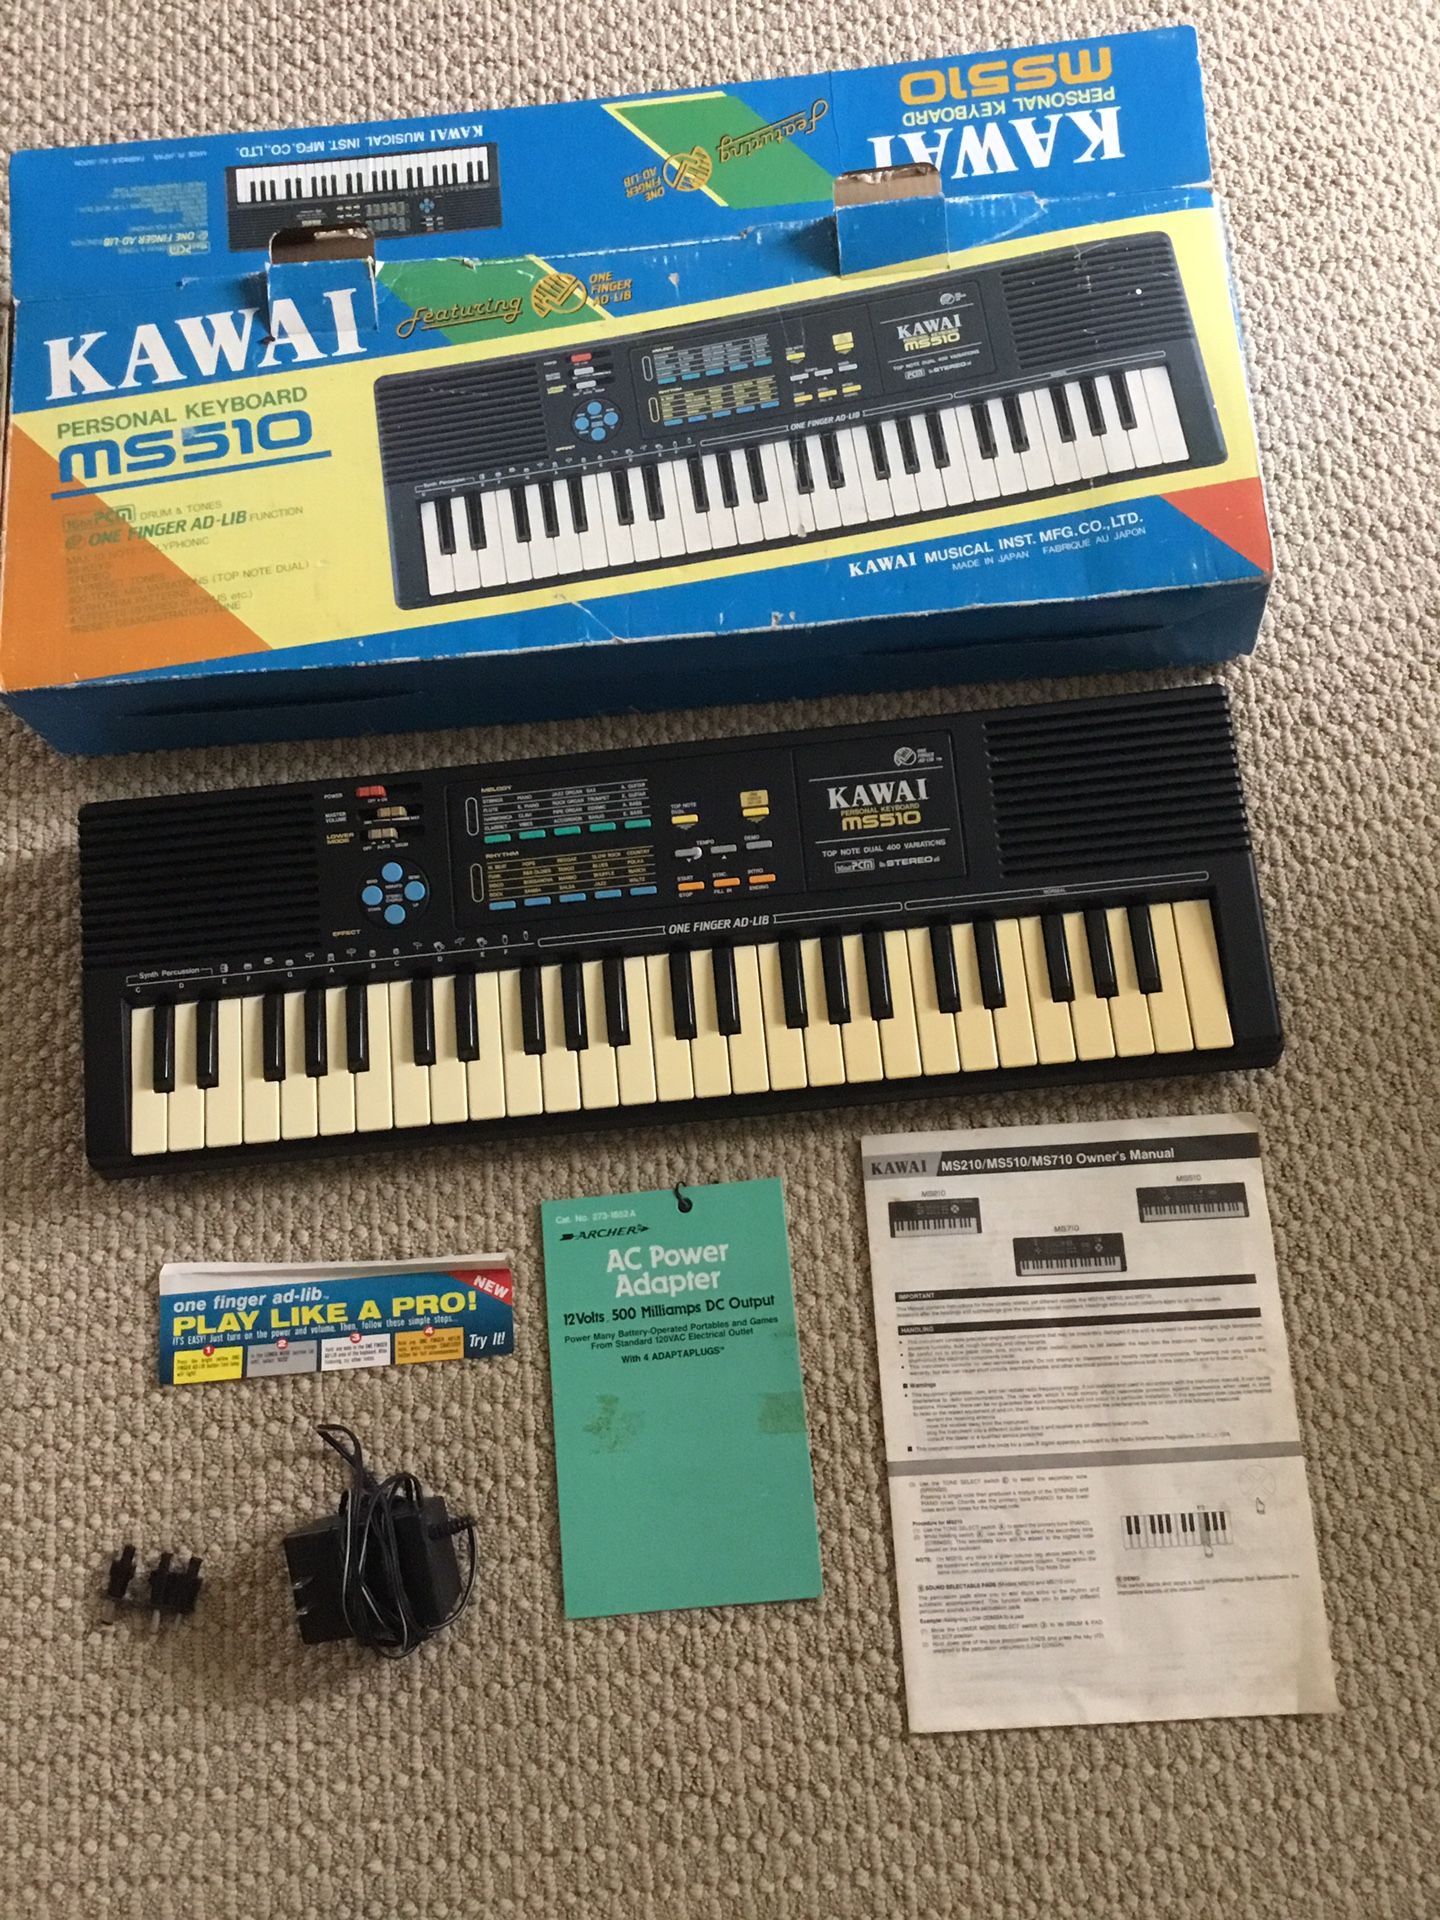 Kawai Personal Keyboard